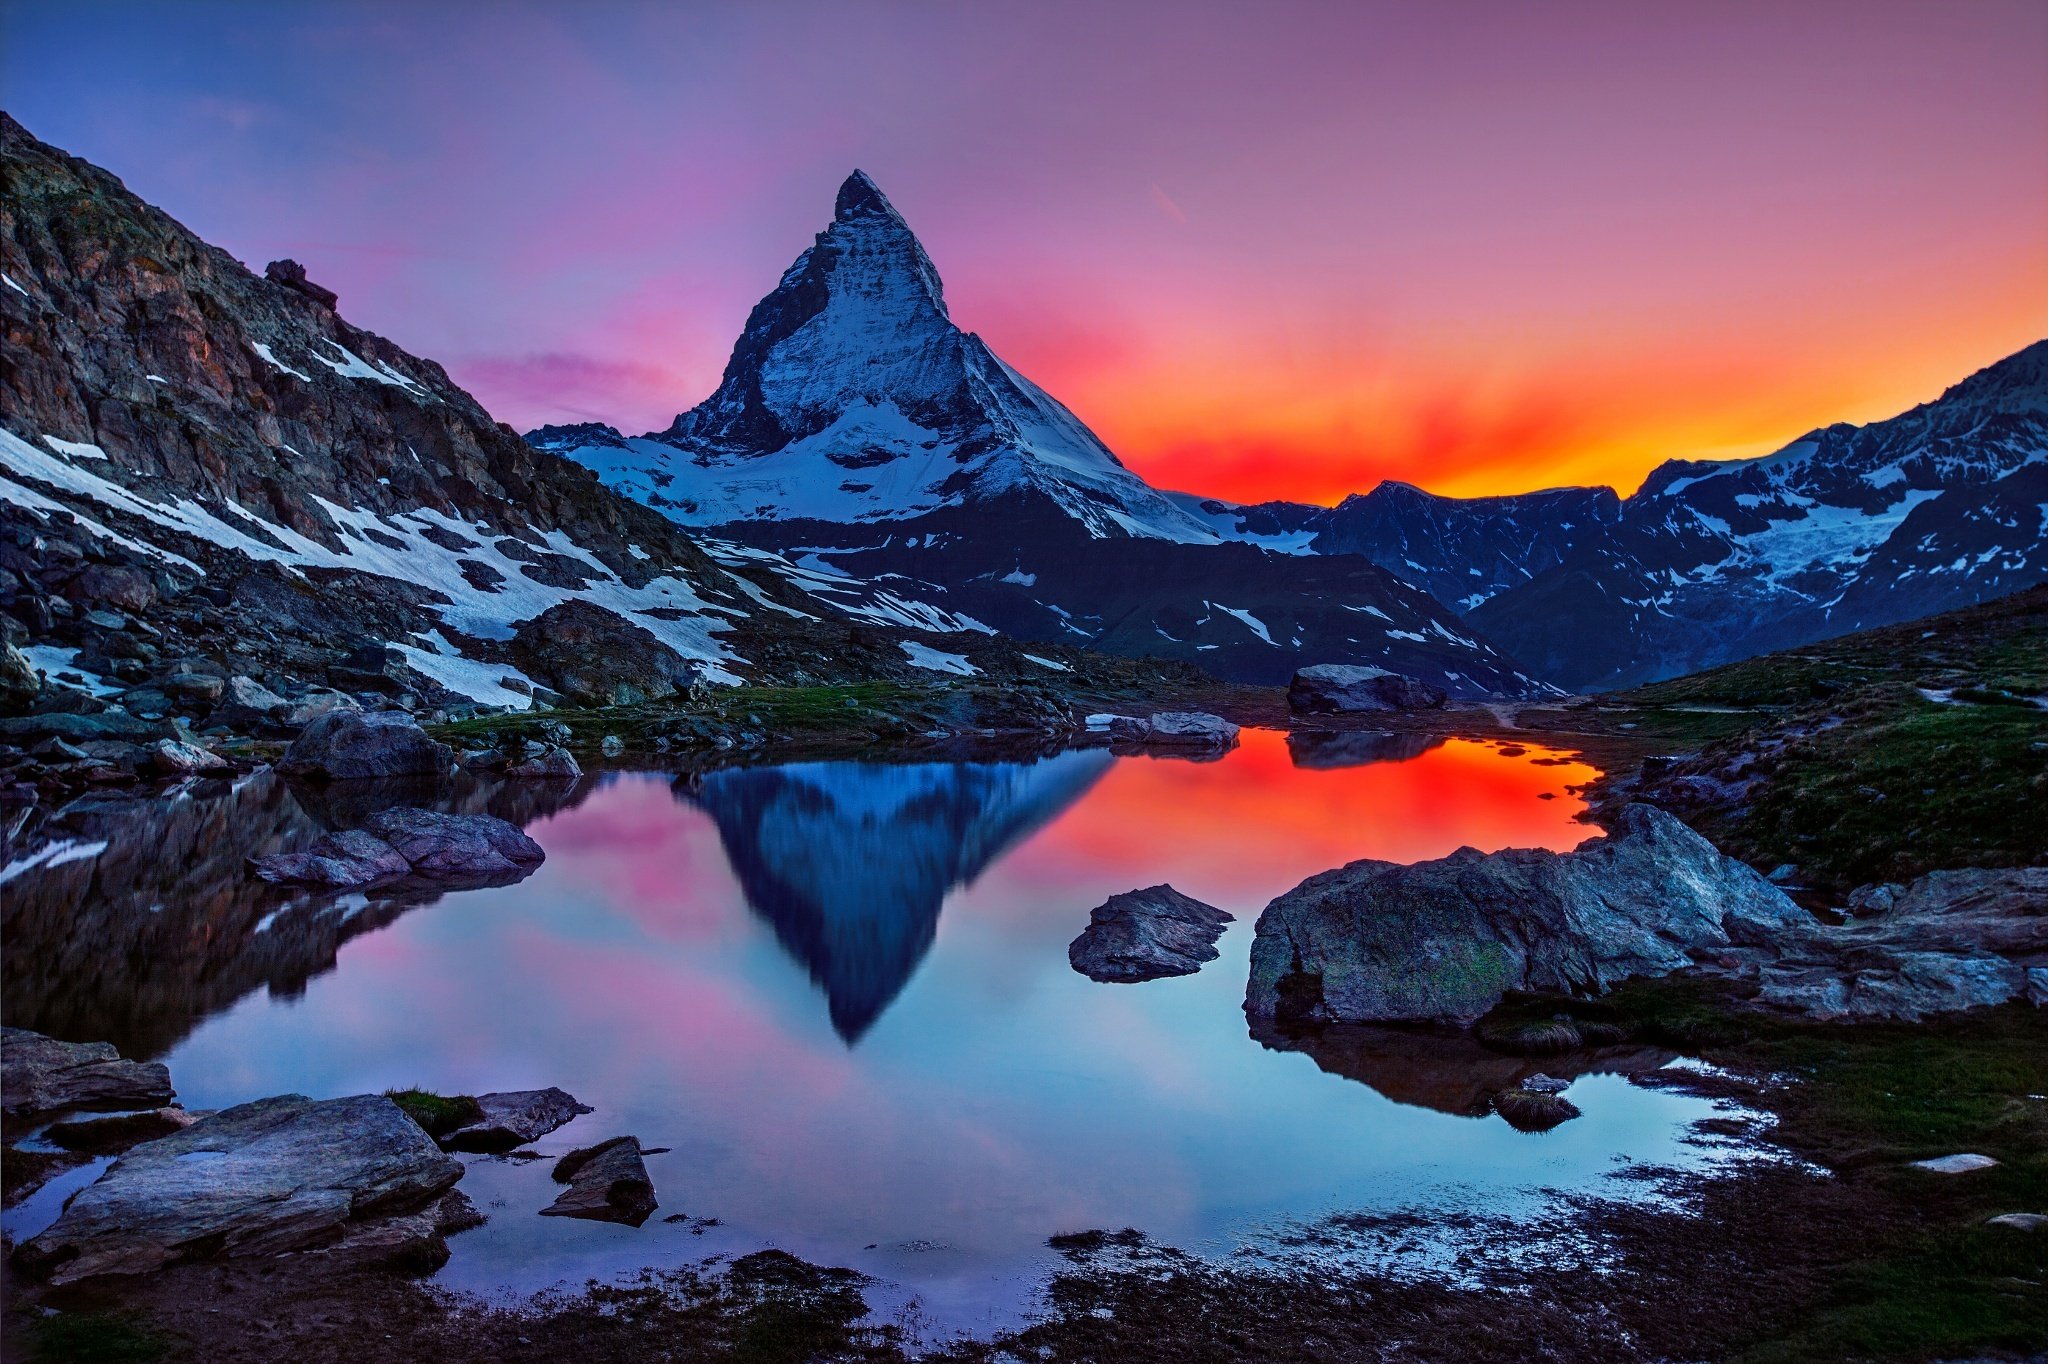 Sunset Landscape Mountain Sky Matterhorn Switzerland The Alps Reflection Wallpapers Hd Desktop And Mobile Backgrounds